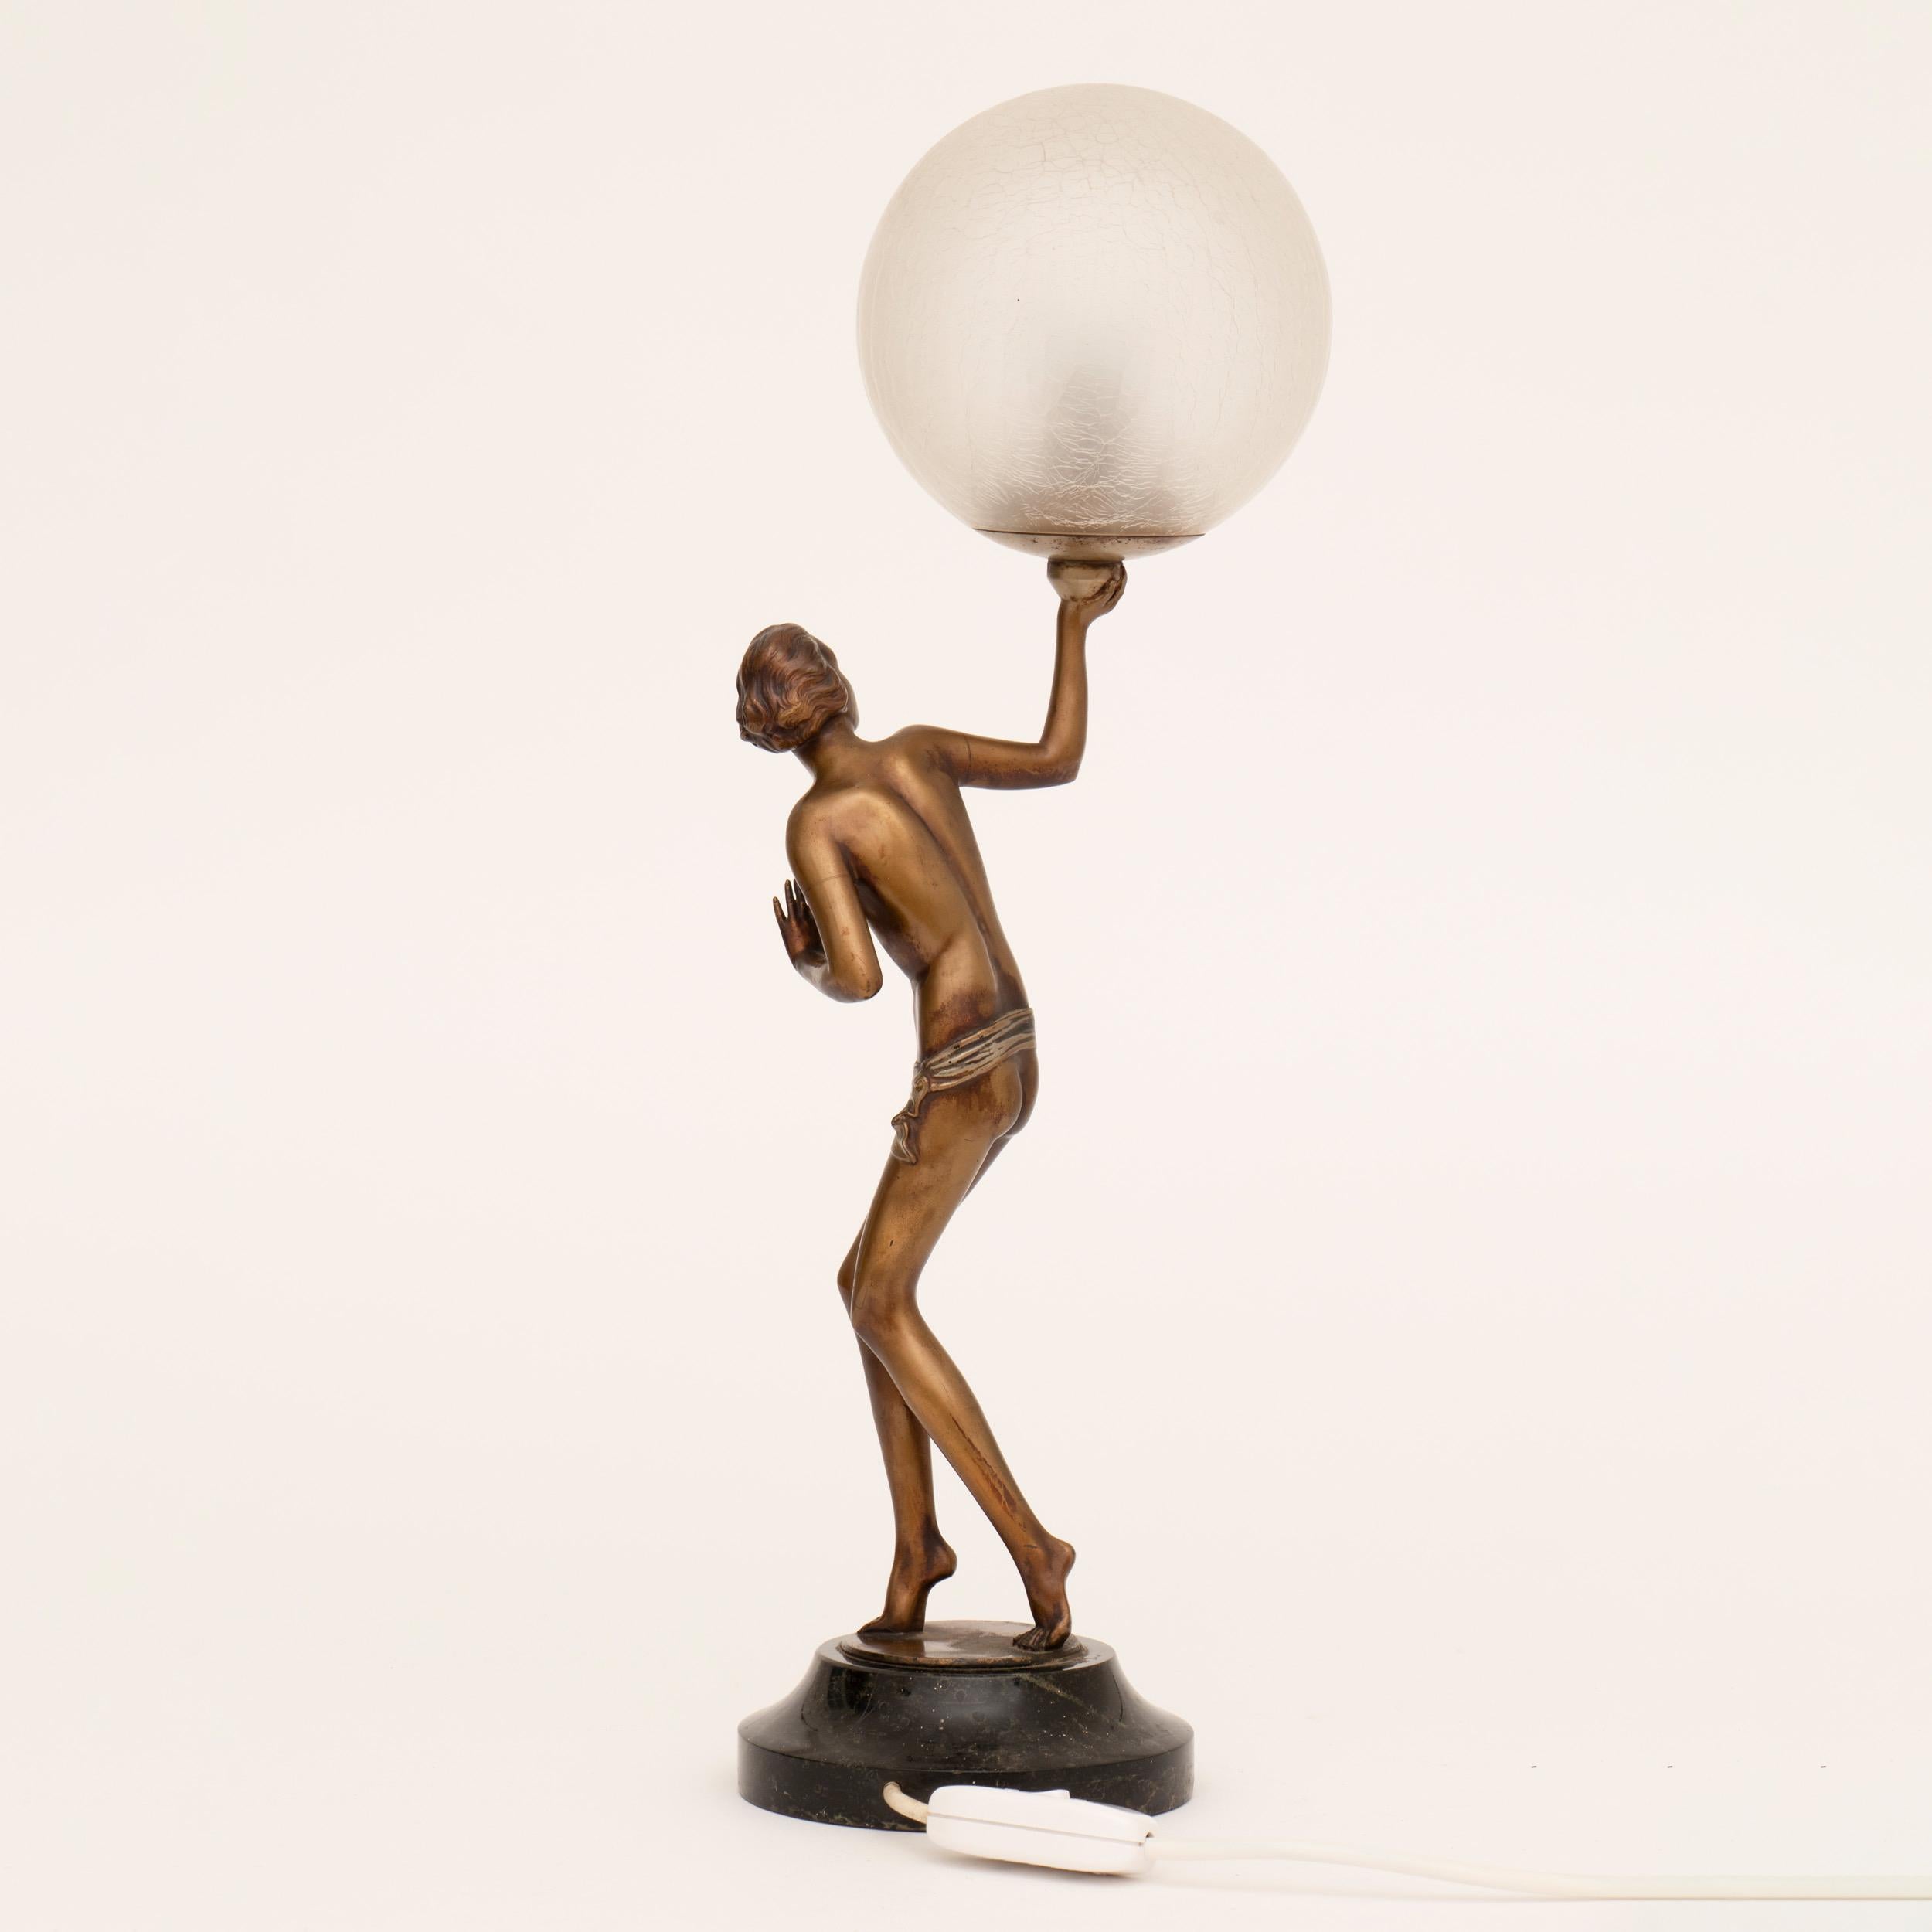 Semi nude Art Deco figure lamp holding aloft a crackle glaze illuminating globe, raise on a marble plinth.
A figure by Lorenzl.
Measures: H 57cm, W 19cm, D 13cm
French, circa 1930.